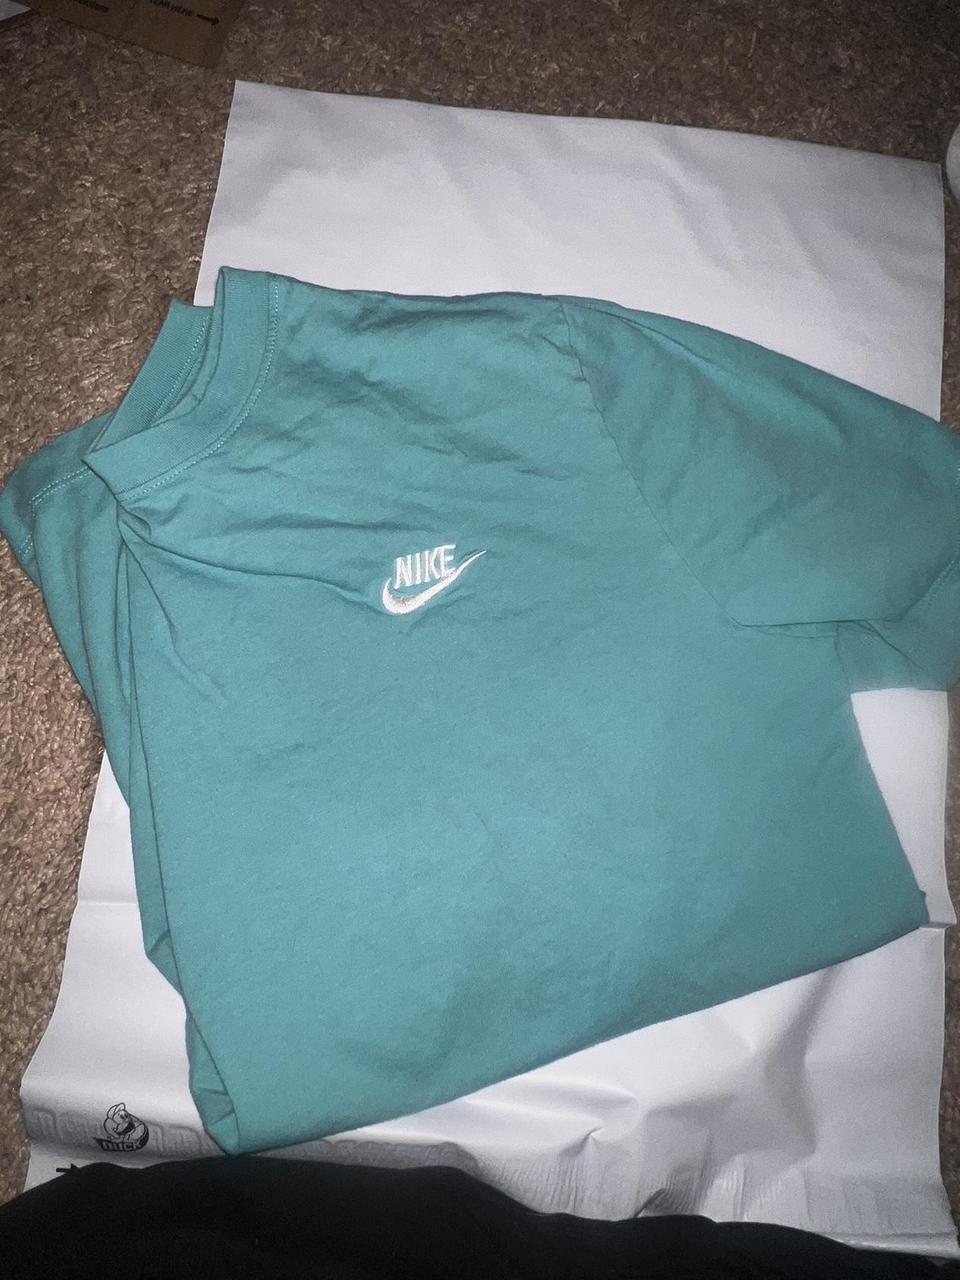 Nike Men's Green and Blue T-shirt